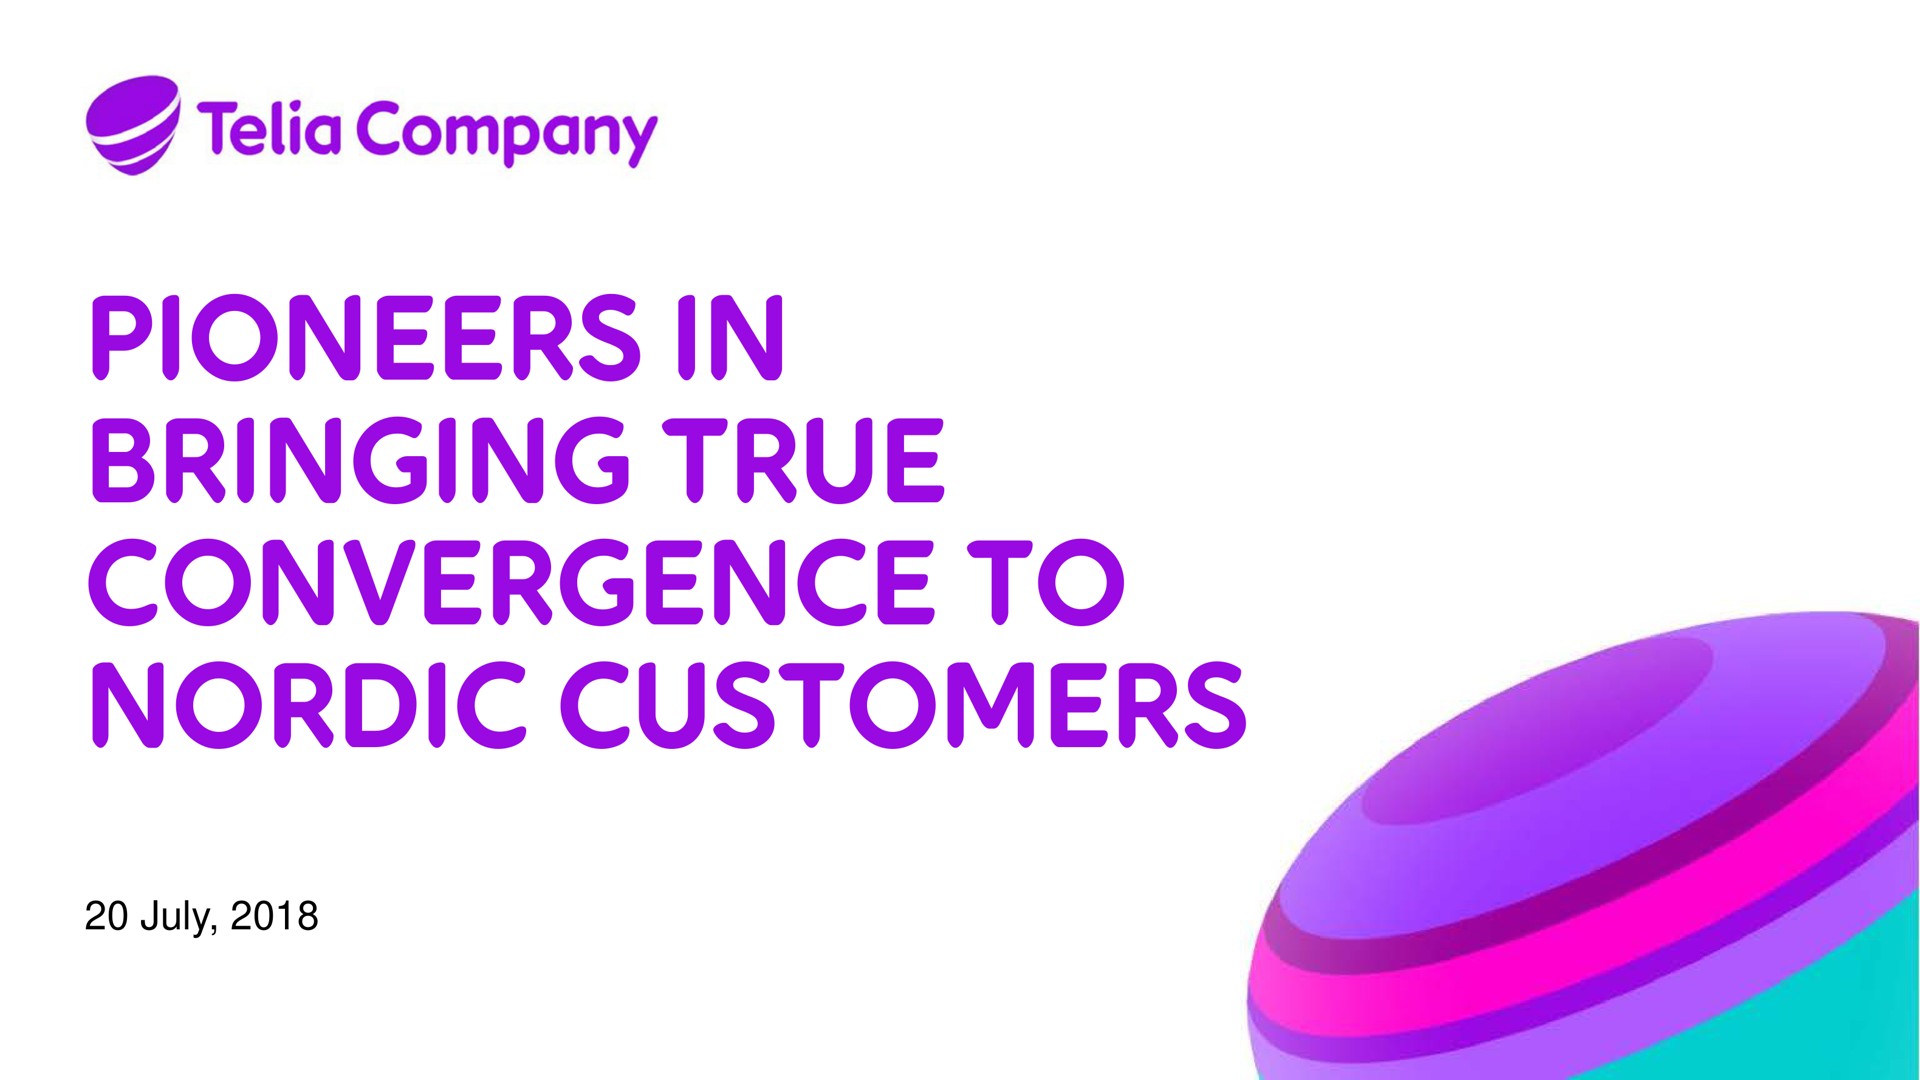 pioneers in bringing true convergence to customers company | Telia Company